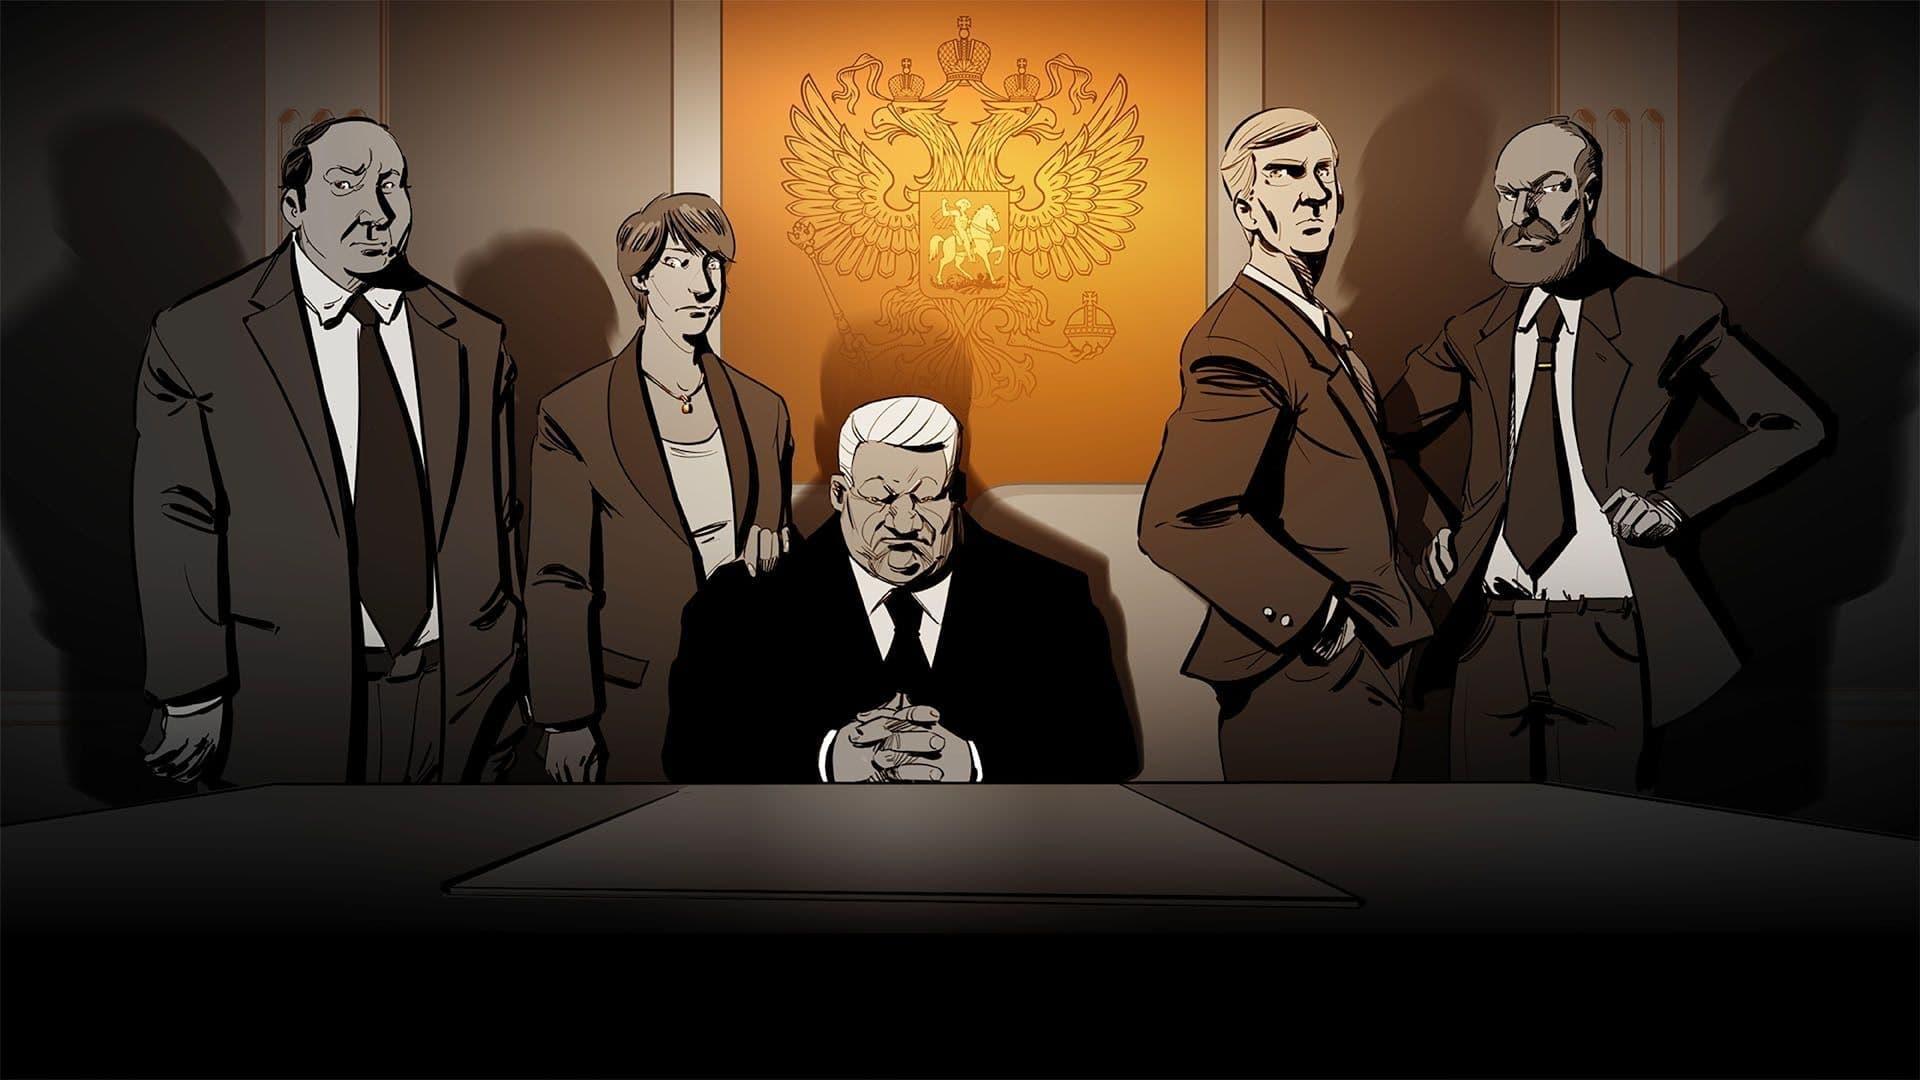 Vladimir Zhirinovsky backdrop